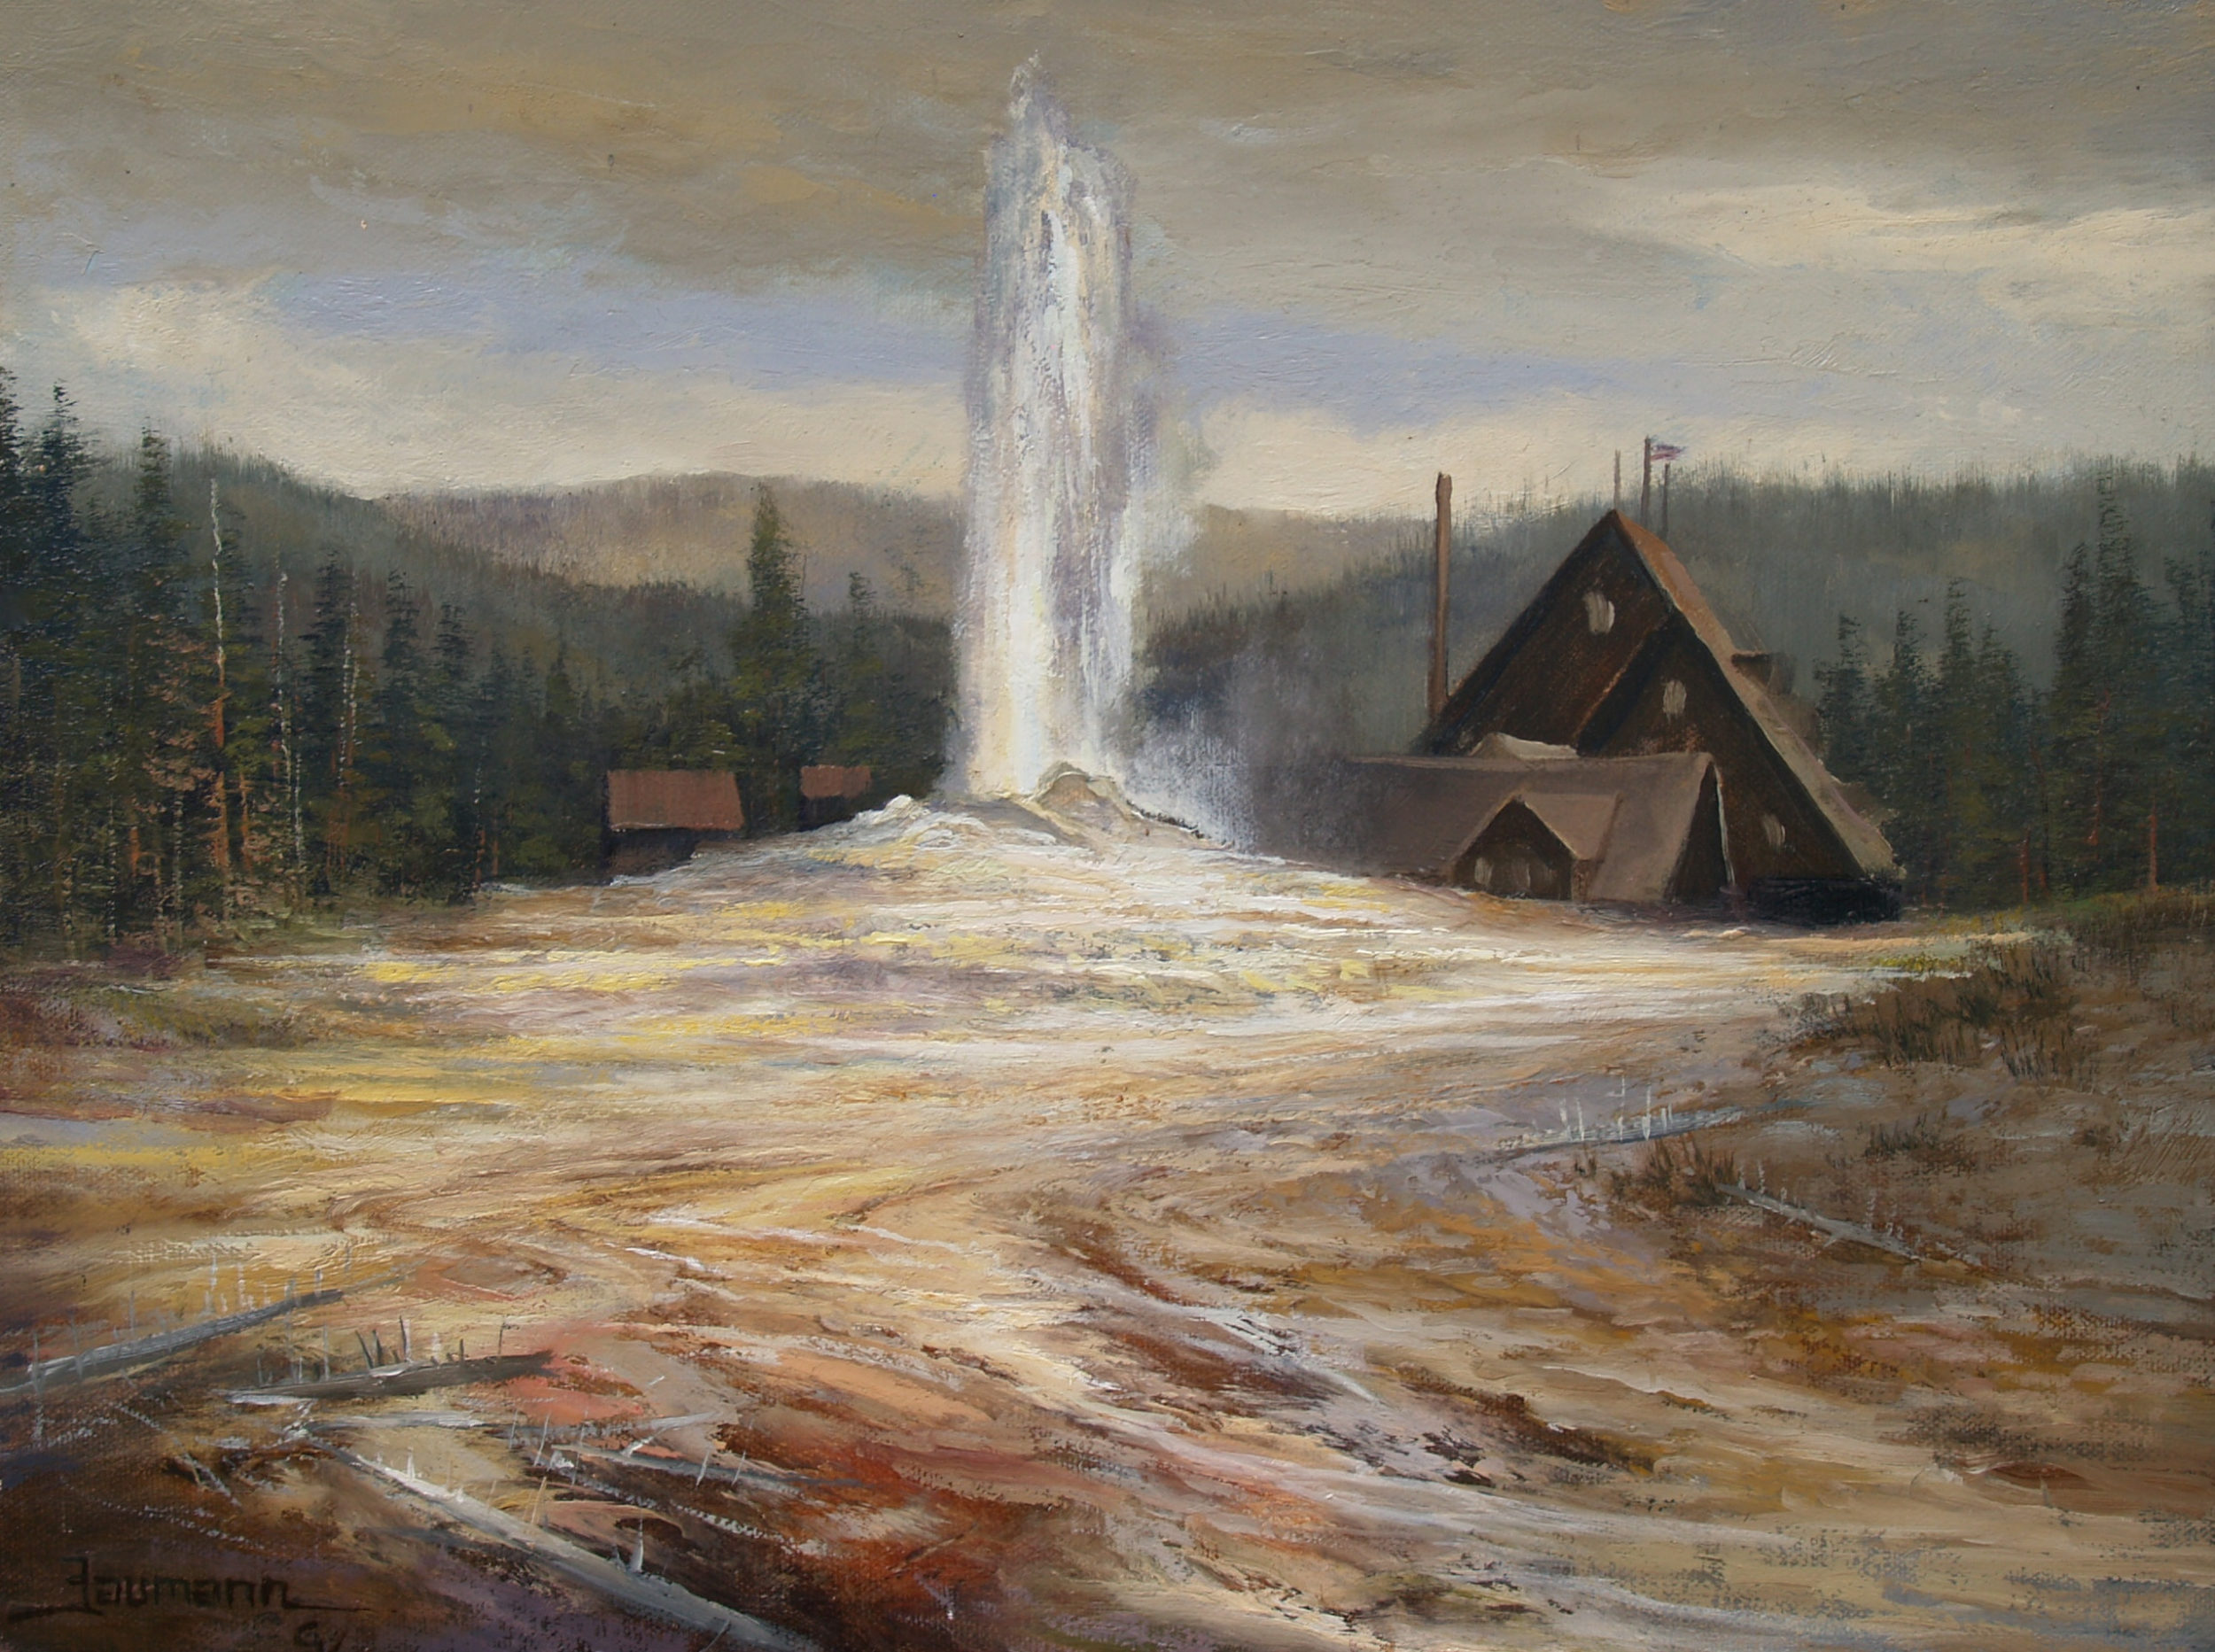 Yellowstone Painting: Old Faithful Lodge - Stefan Baumann